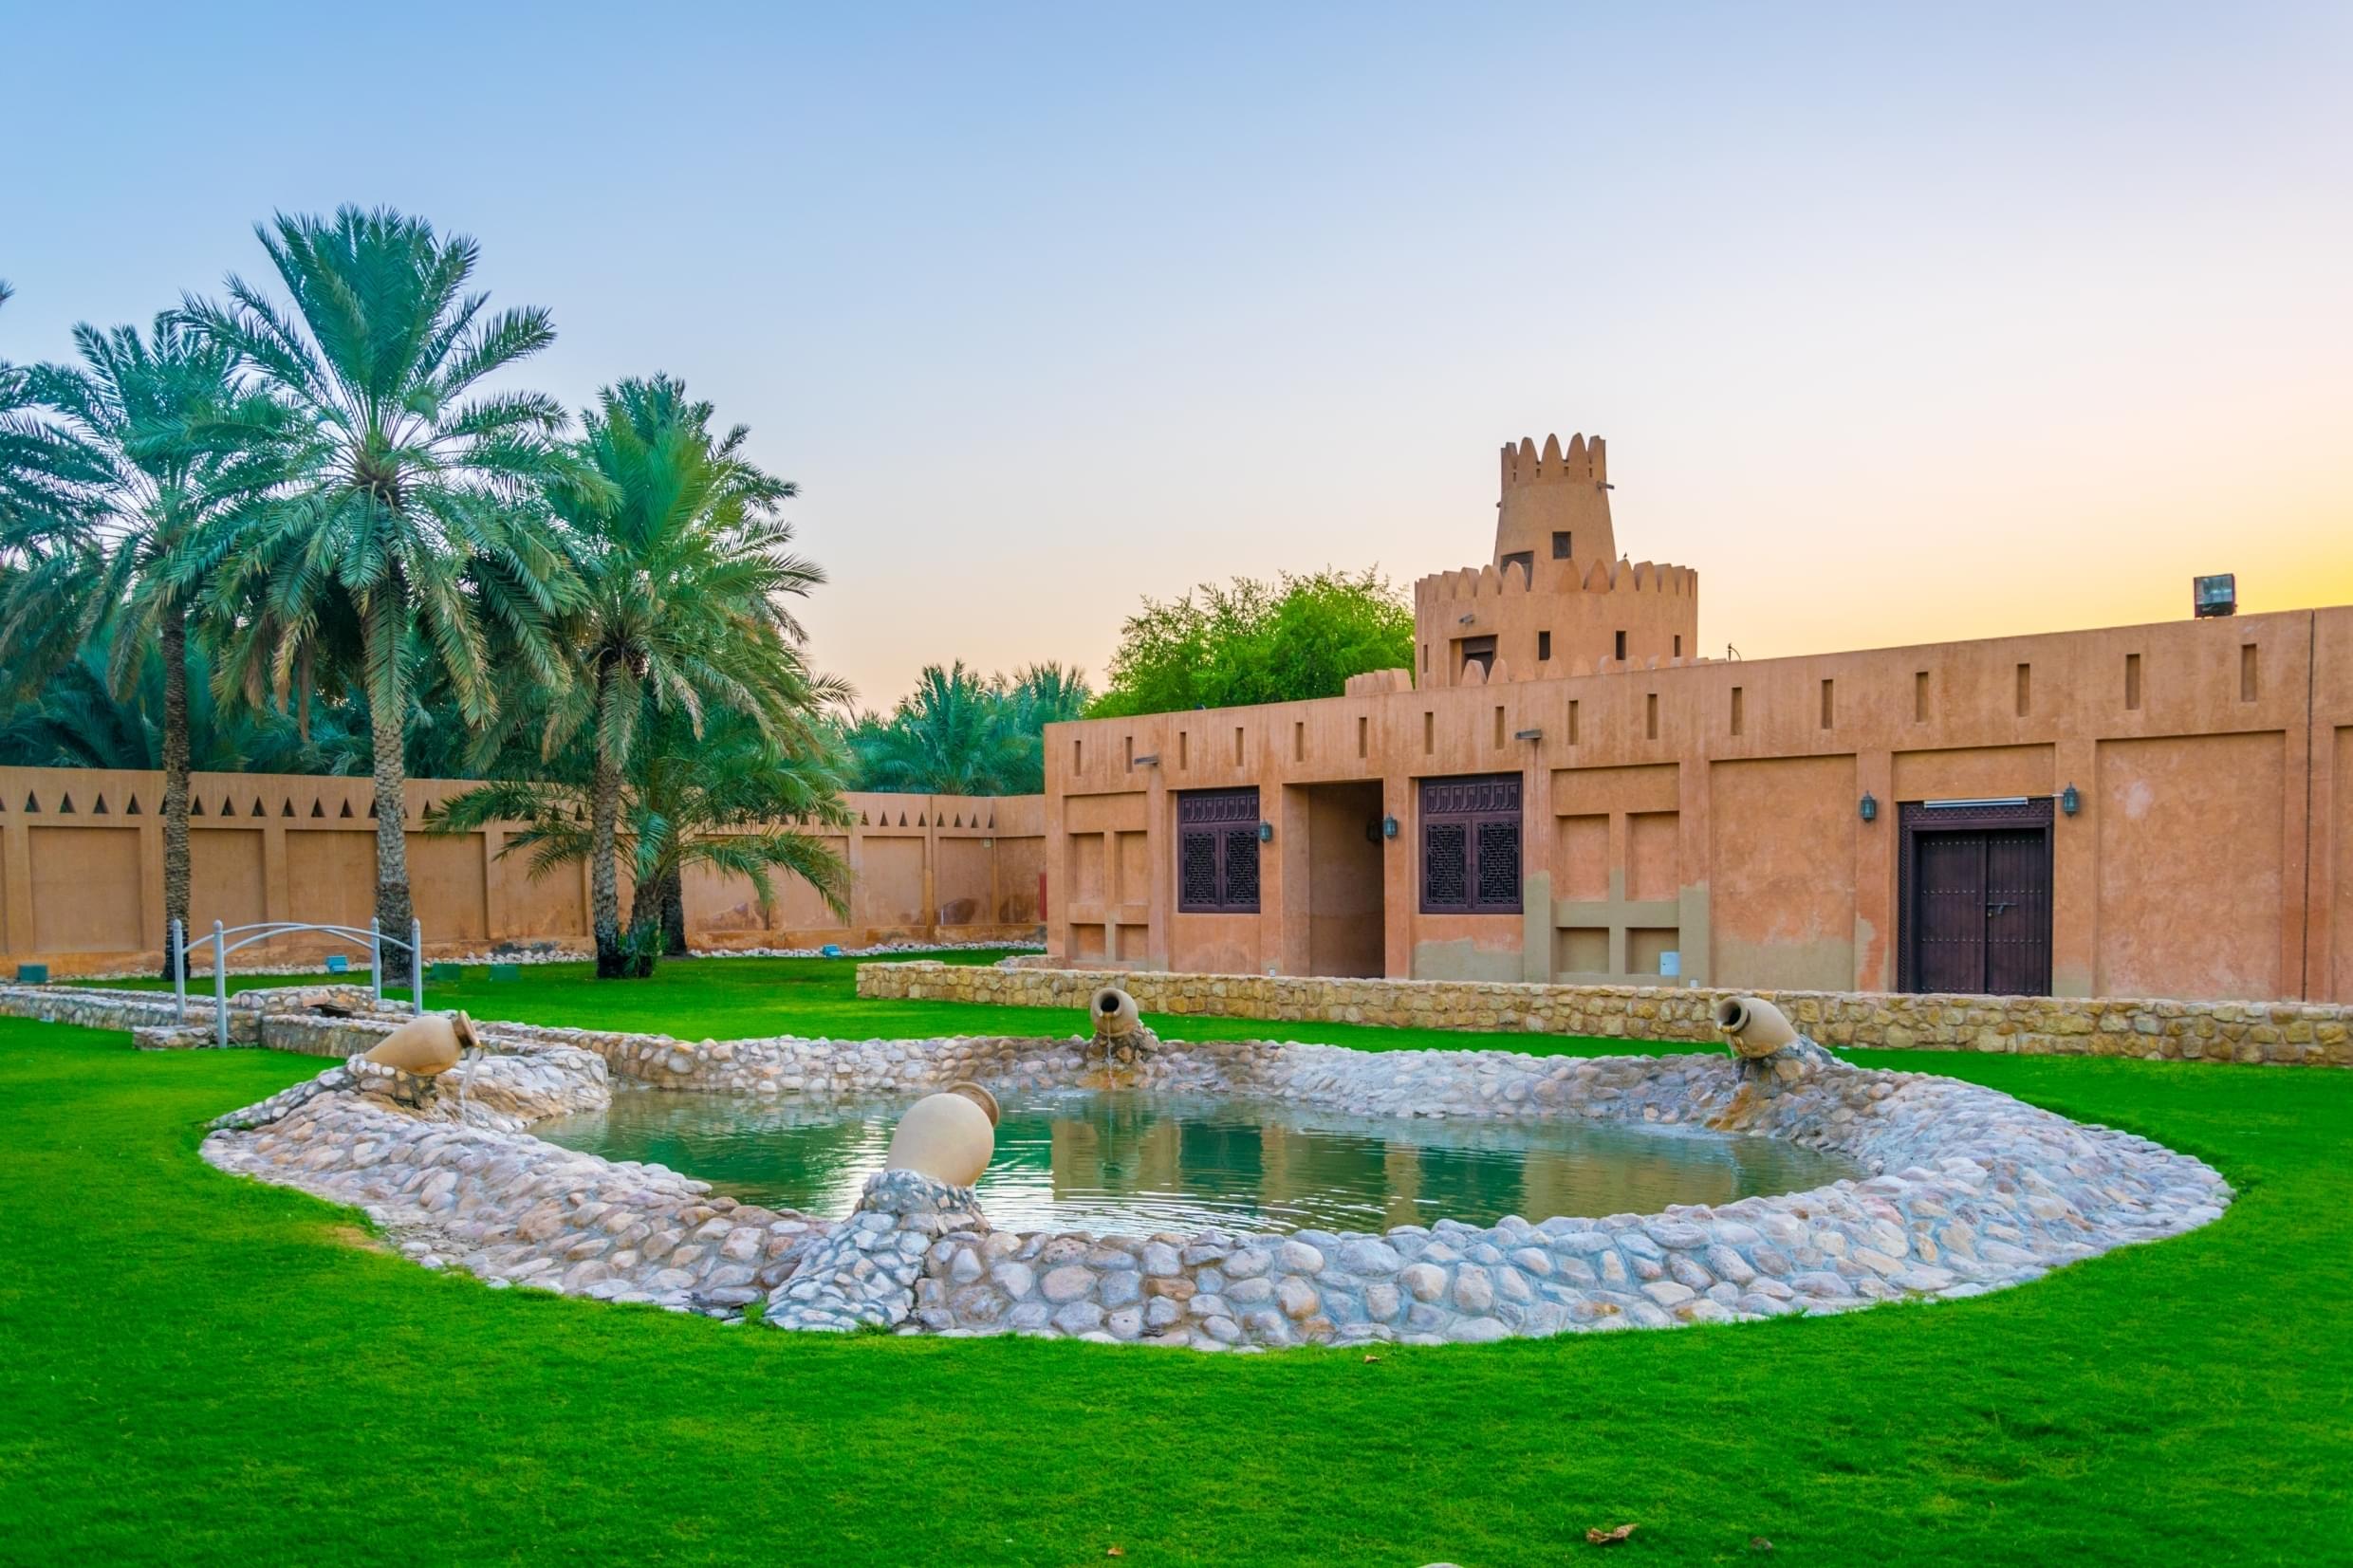 Al Ain Palace Museum Overview